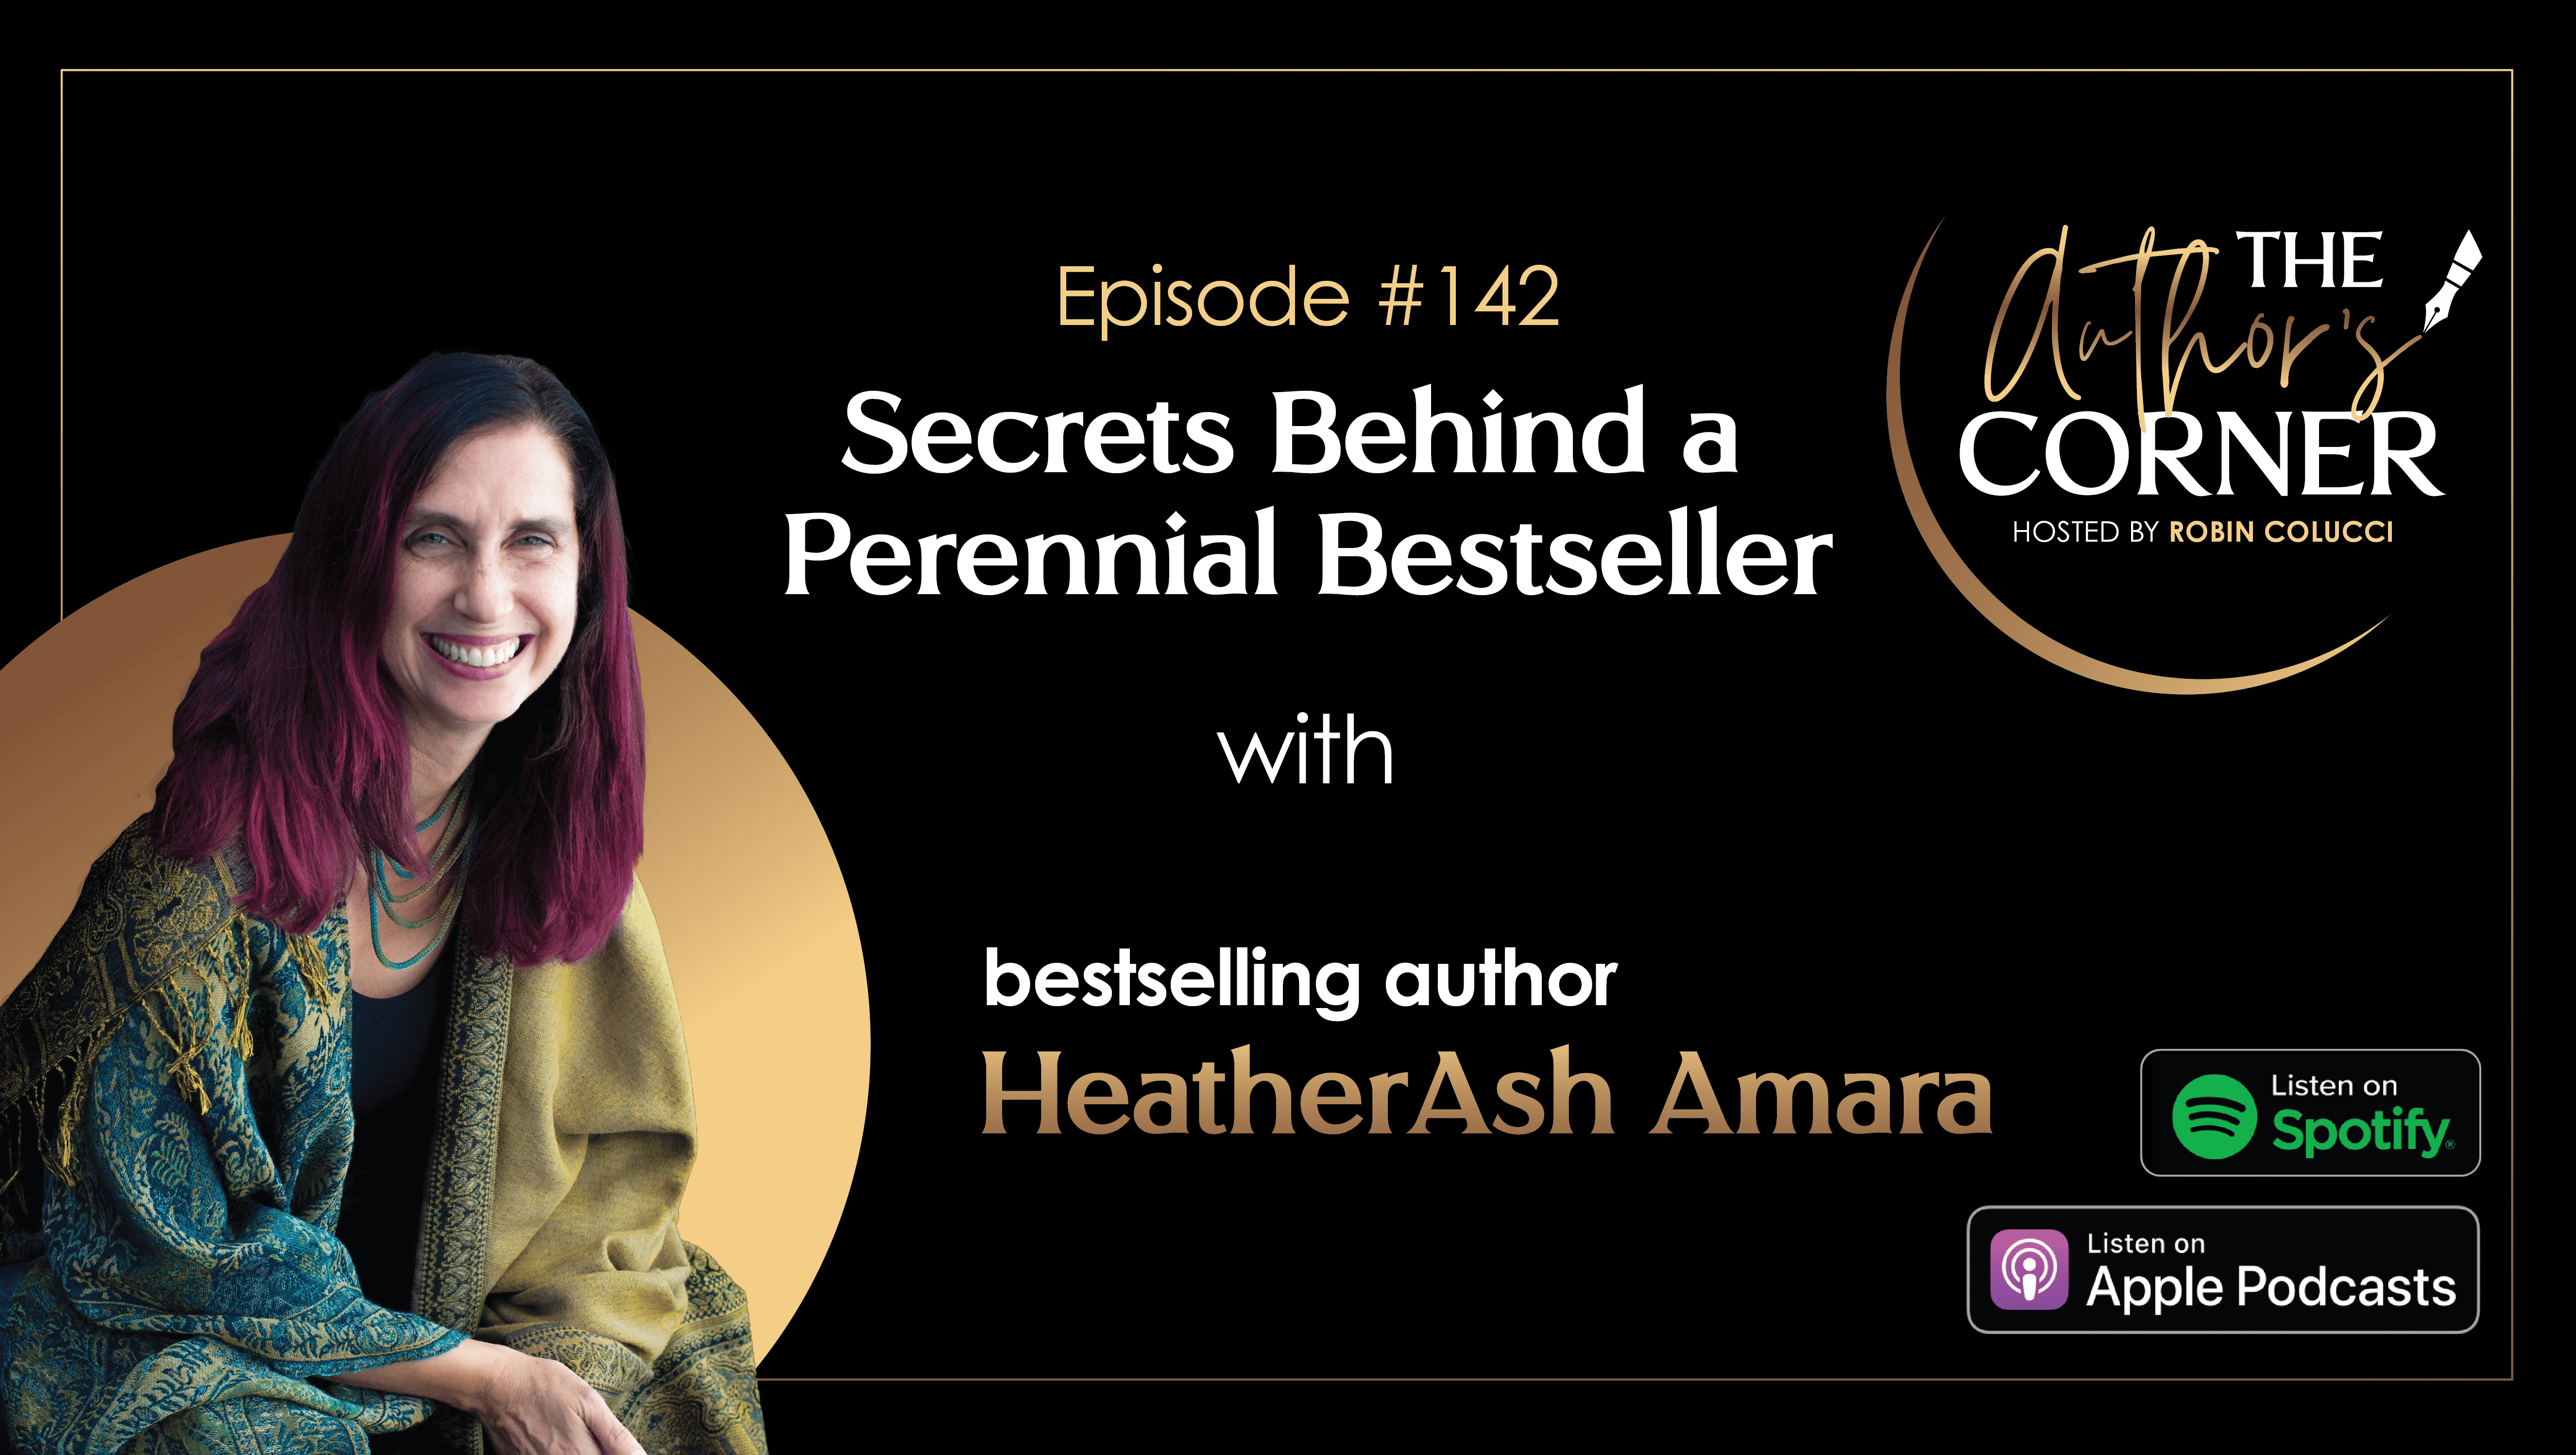 Secrets Behind a Perennial Bestseller with HeatherAsh Amara